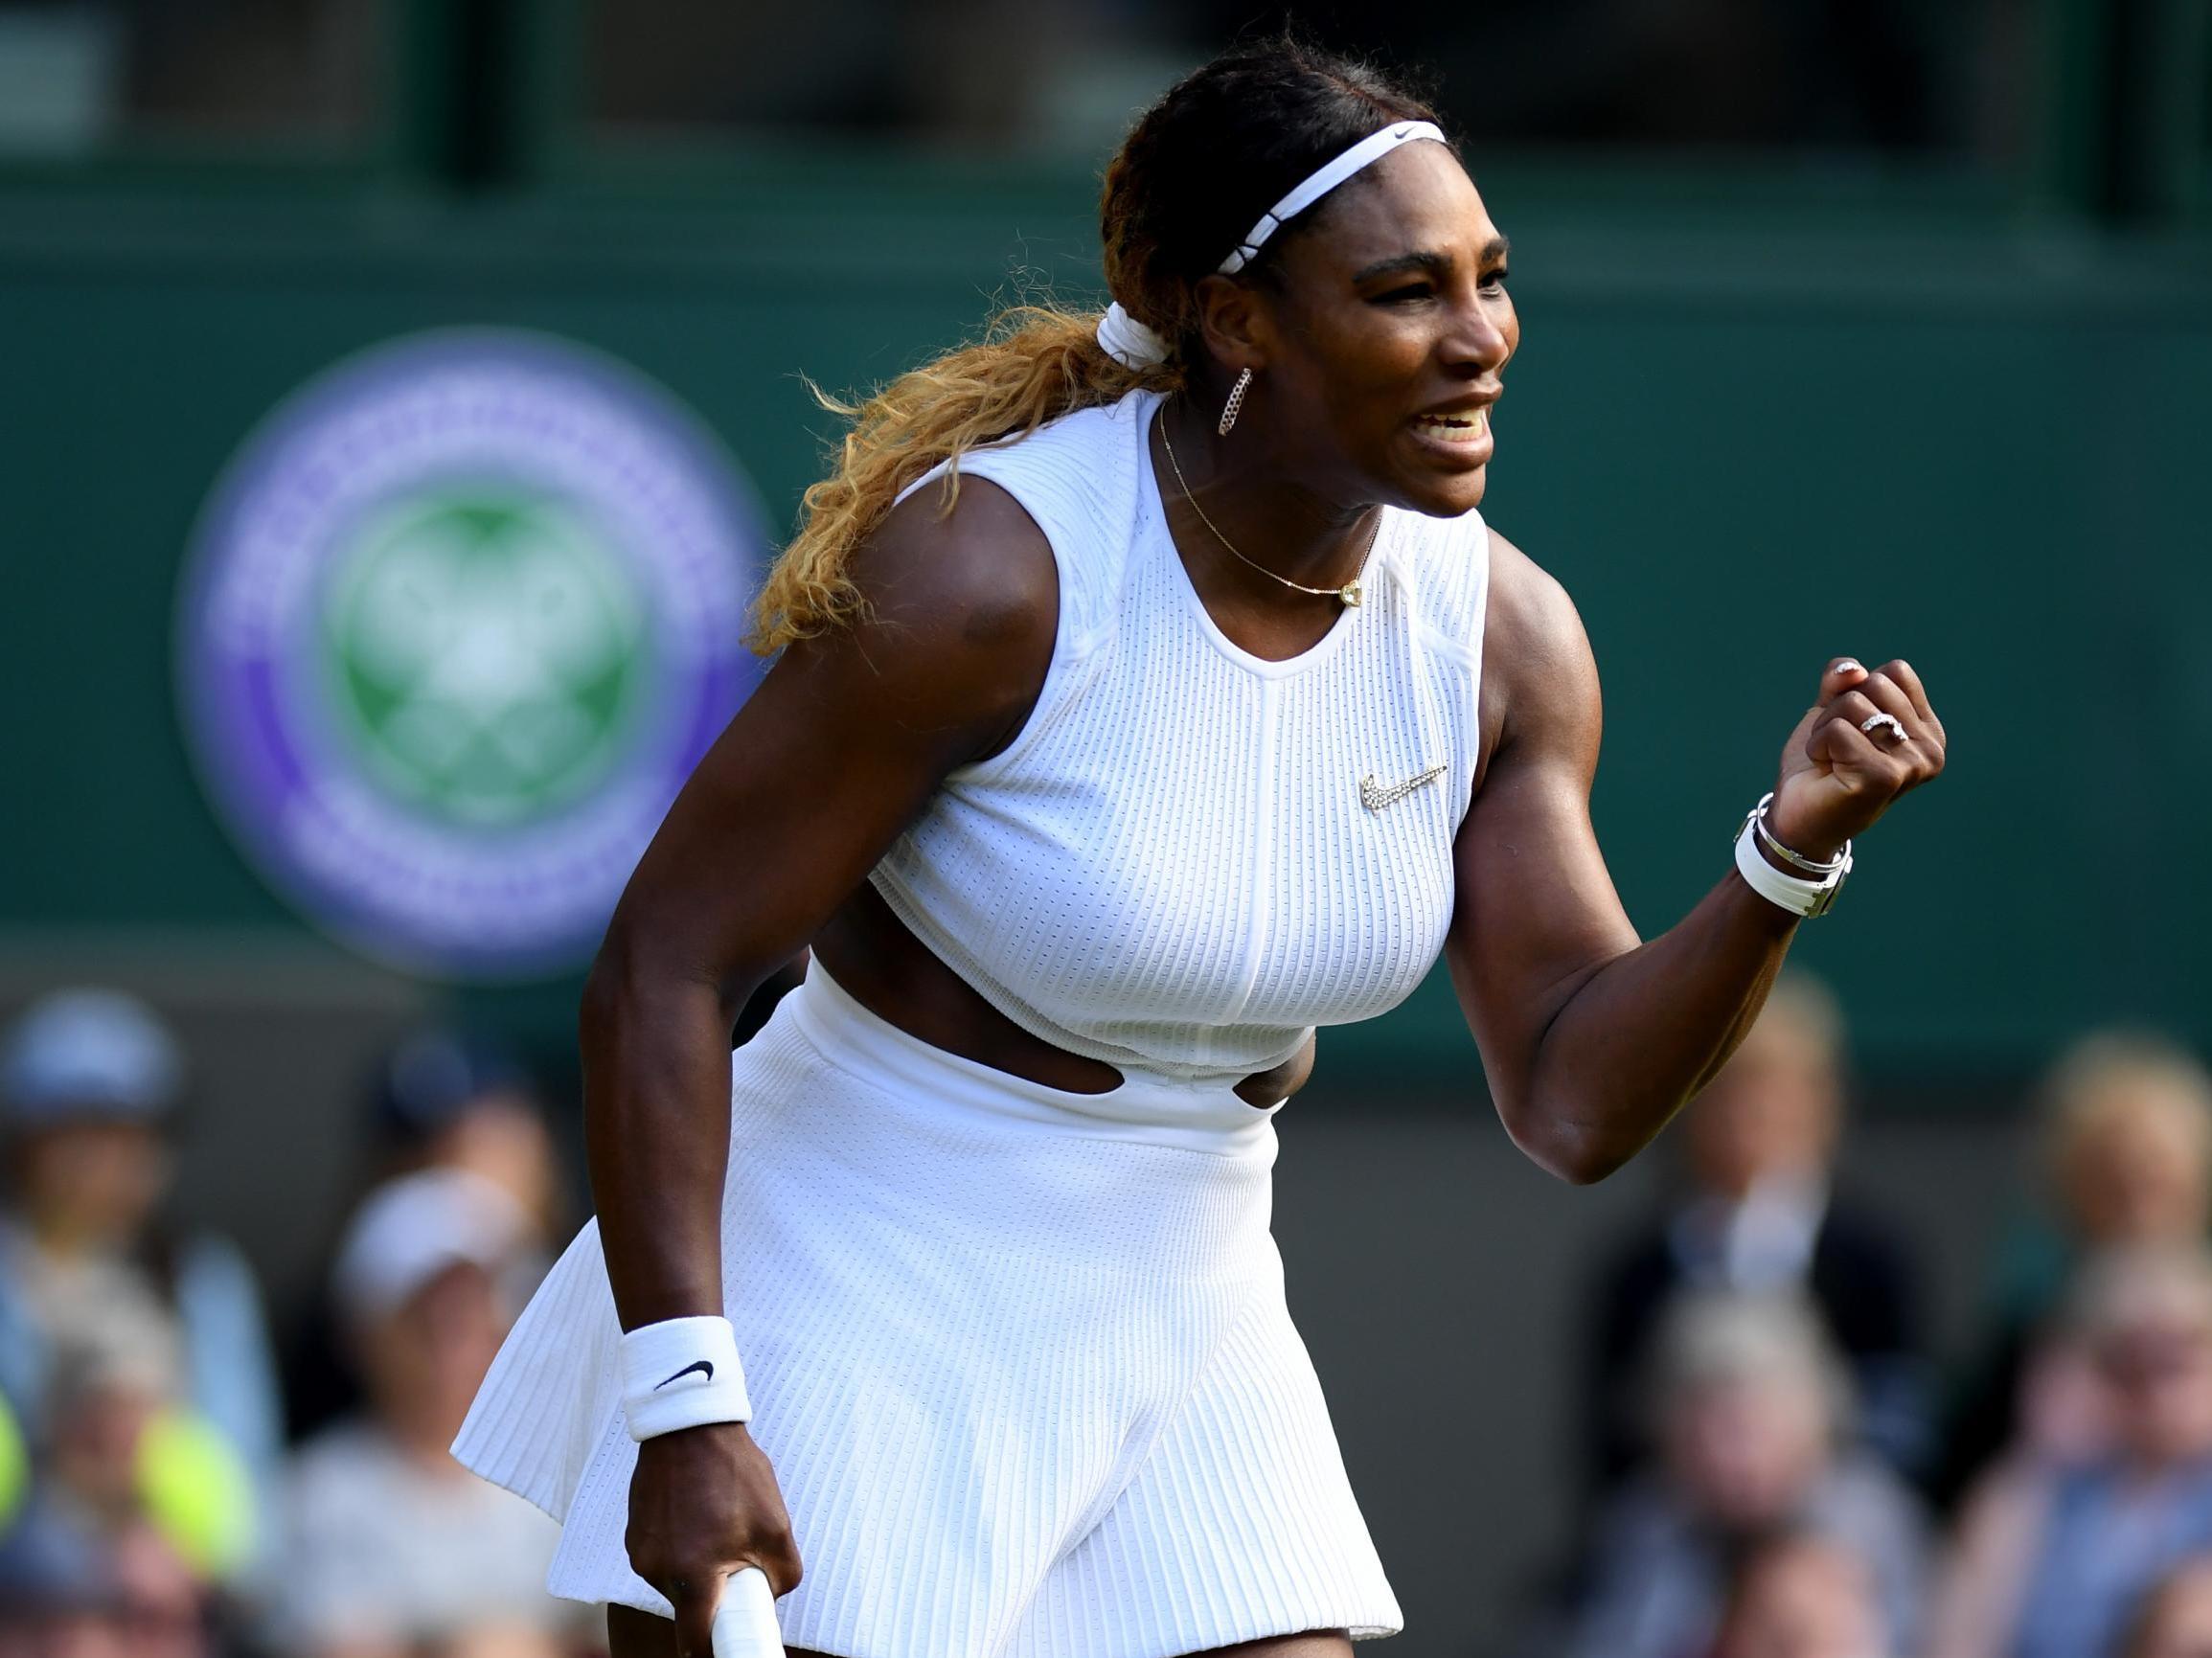 Wimbledon 2019 – women's singles: Serena Williams and Johanna Konta into second round as Garbine Muguruza crashes out